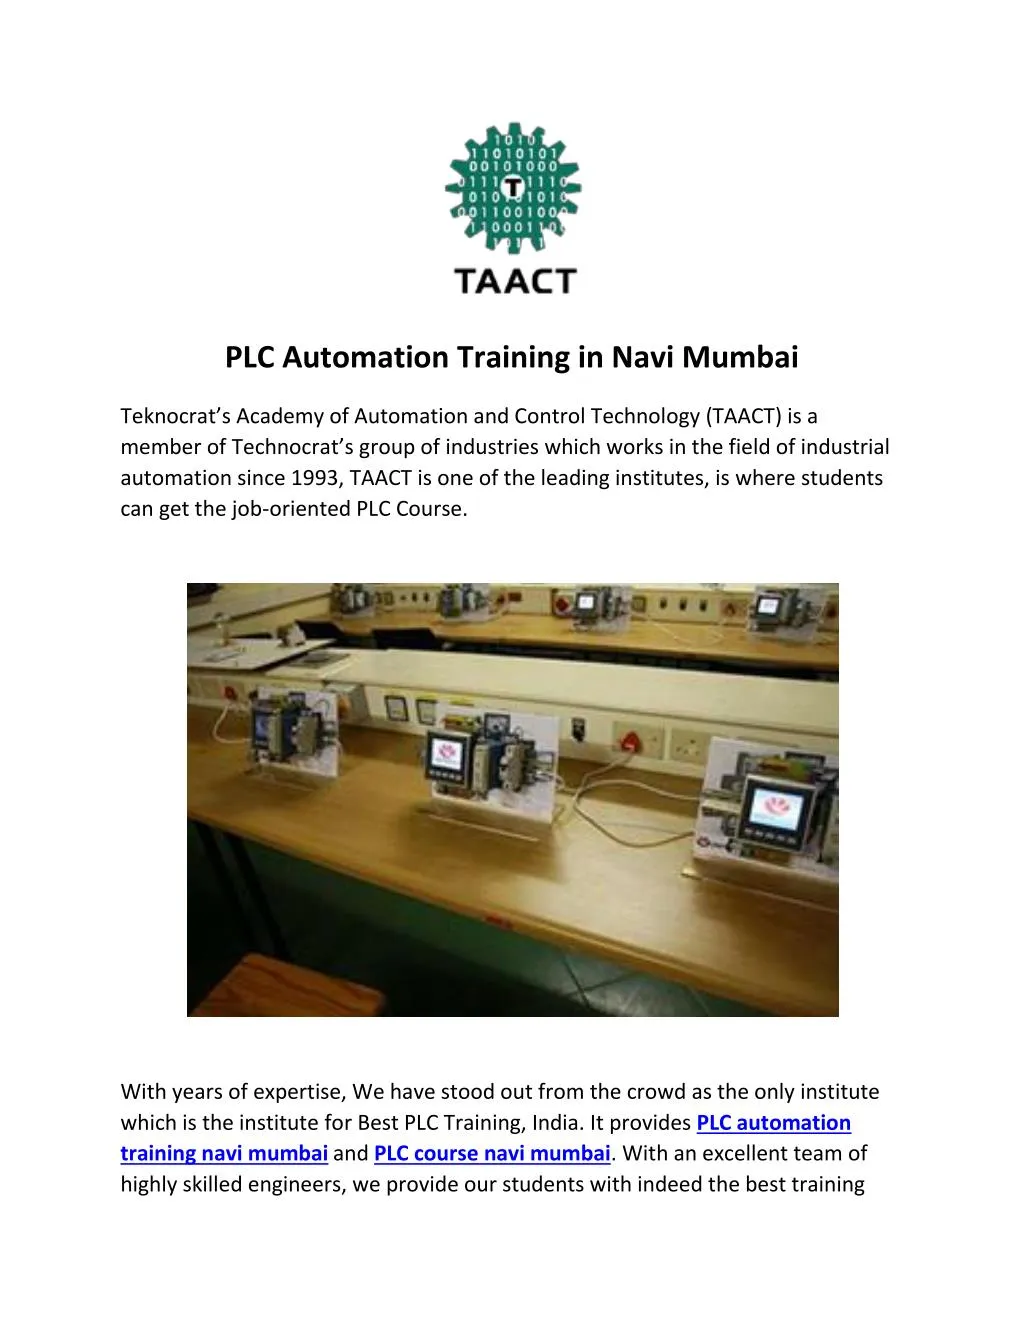 plc automation training in navi mumbai